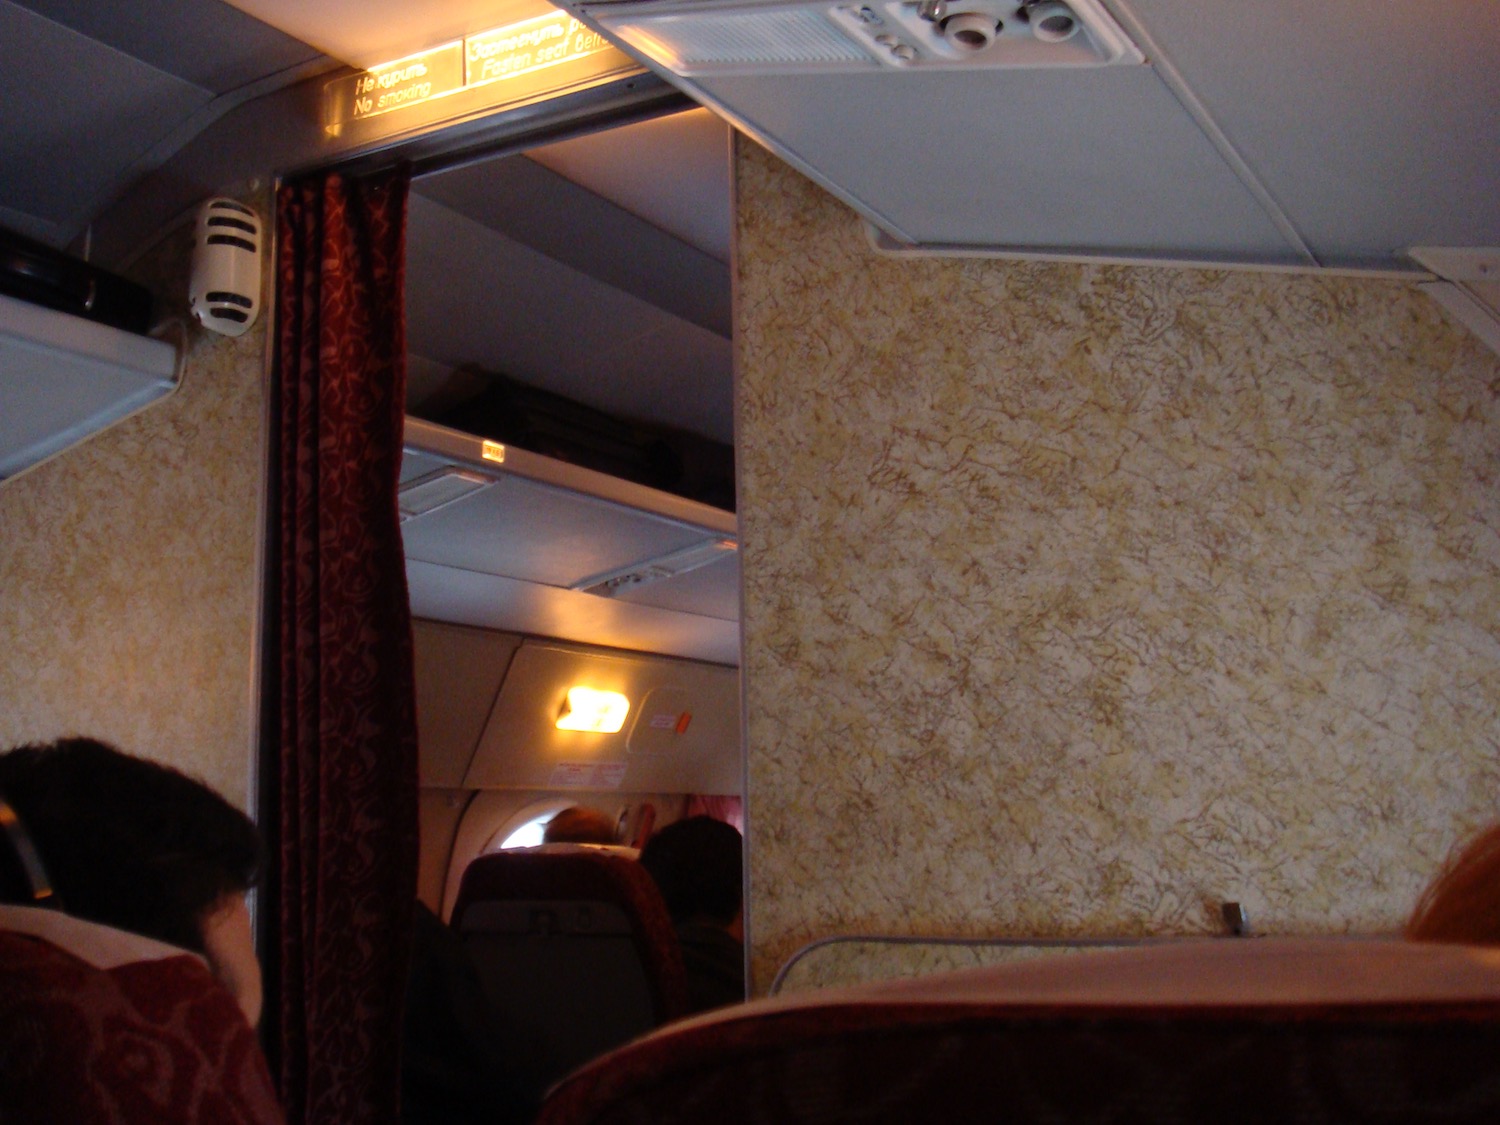 a mirror on a plane